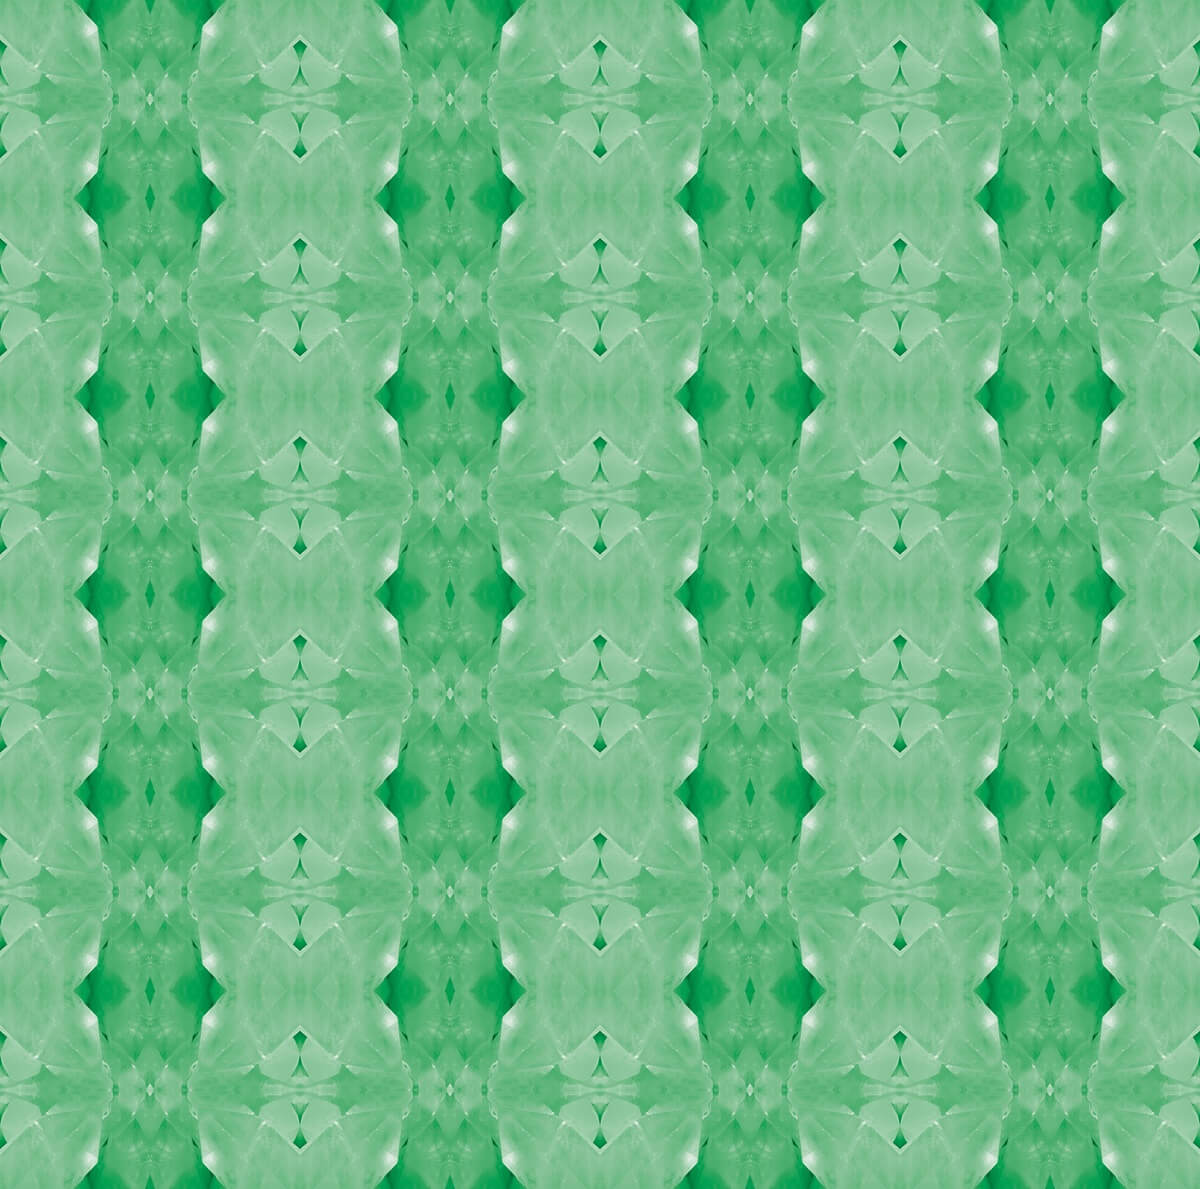 Ghost Quartz pattern in green